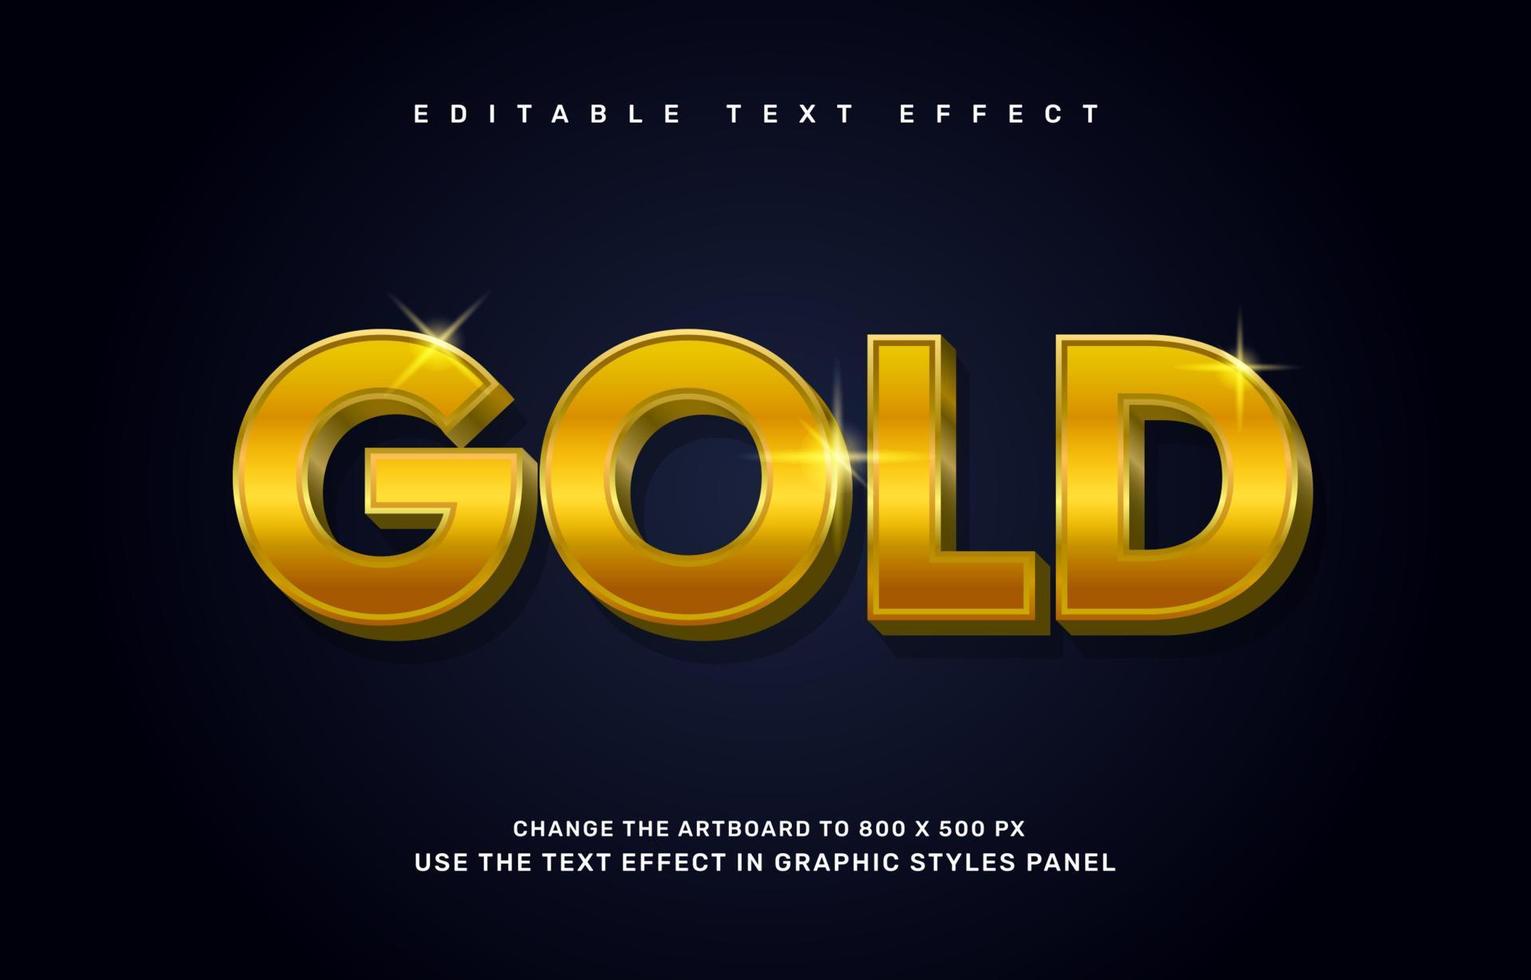 Elegant Gold chrome editable text effect template vector